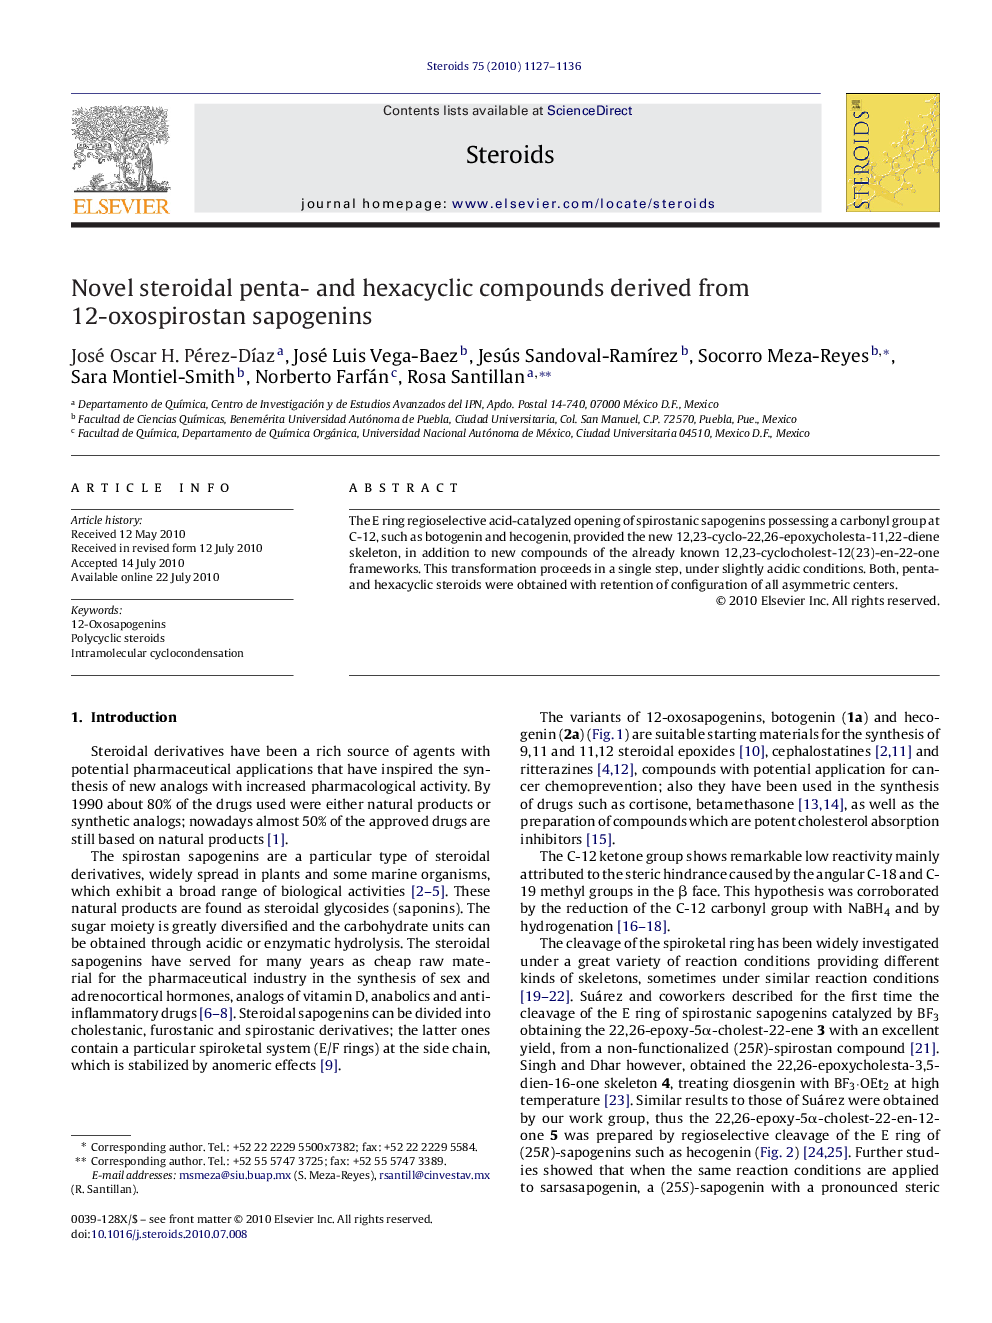 Novel steroidal penta- and hexacyclic compounds derived from 12-oxospirostan sapogenins